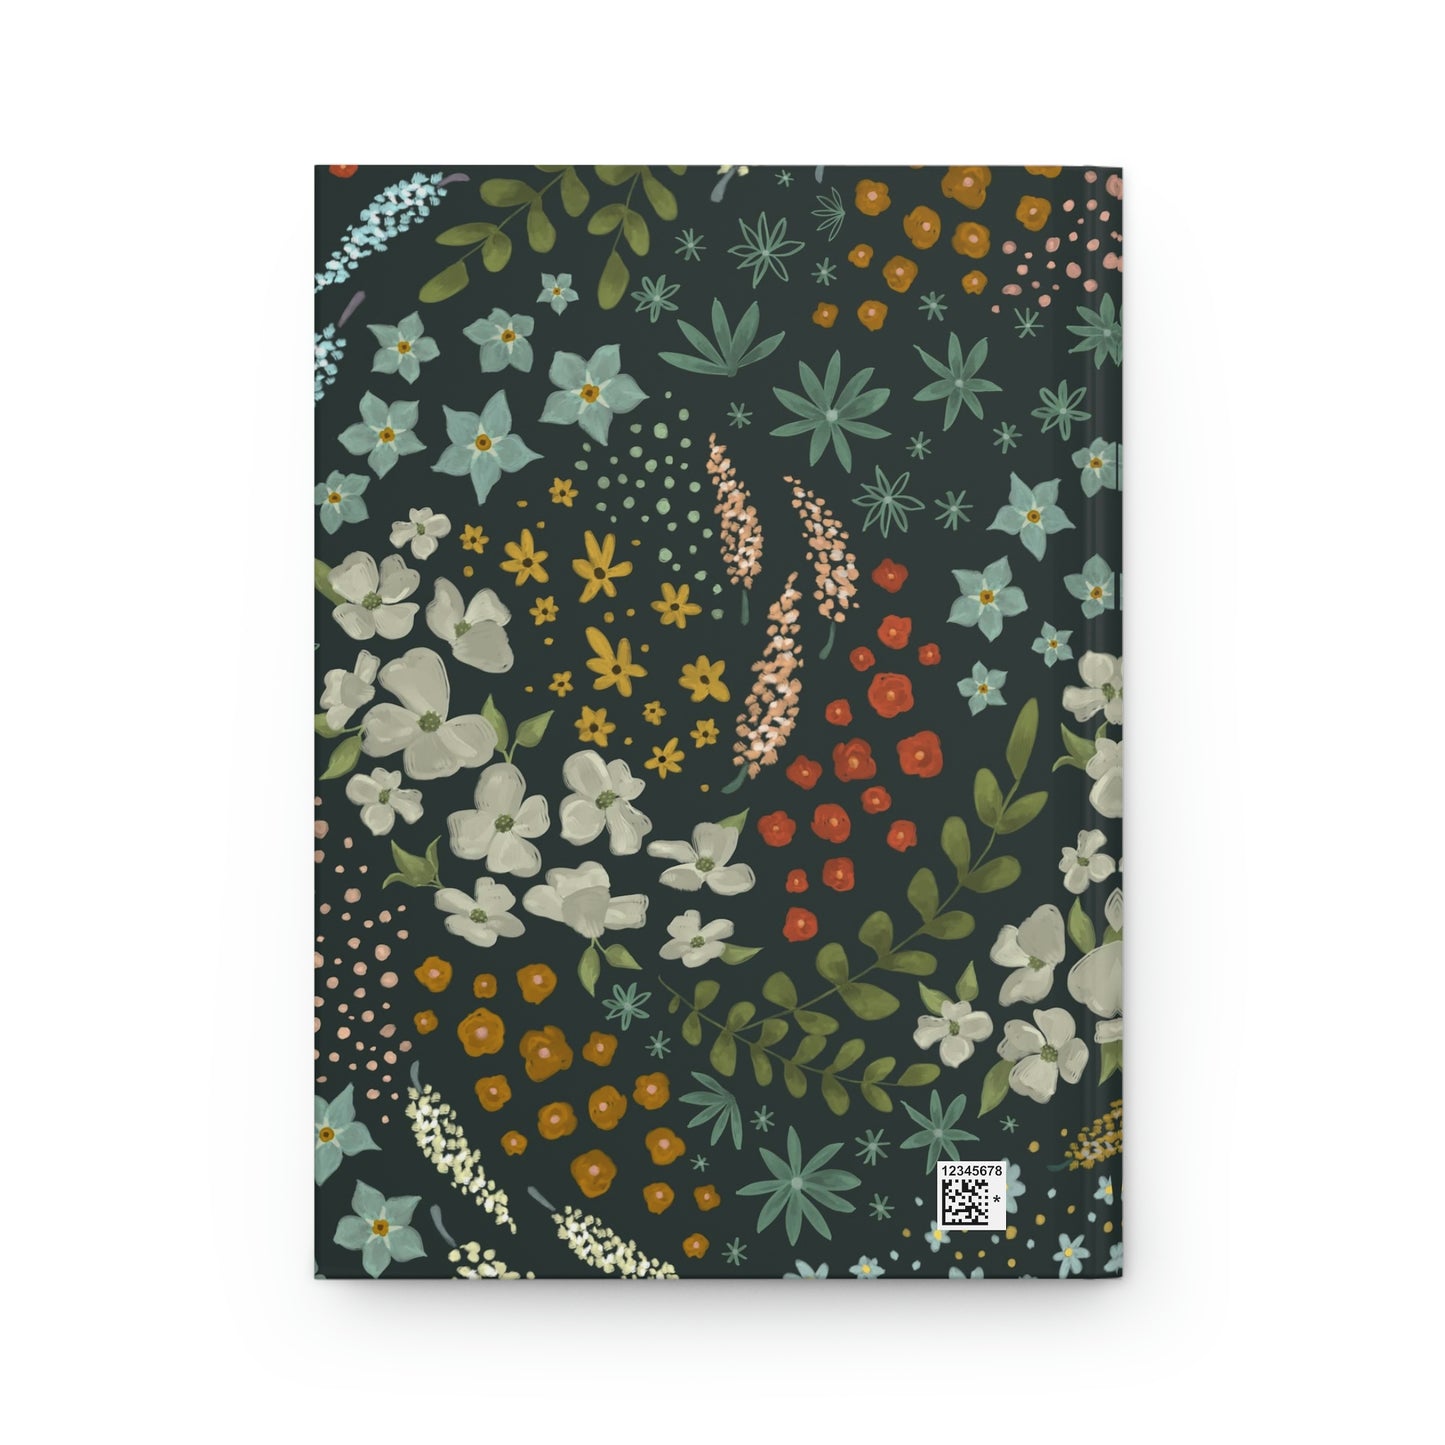 Dark Floral Hardcover Journal - Line Ruled